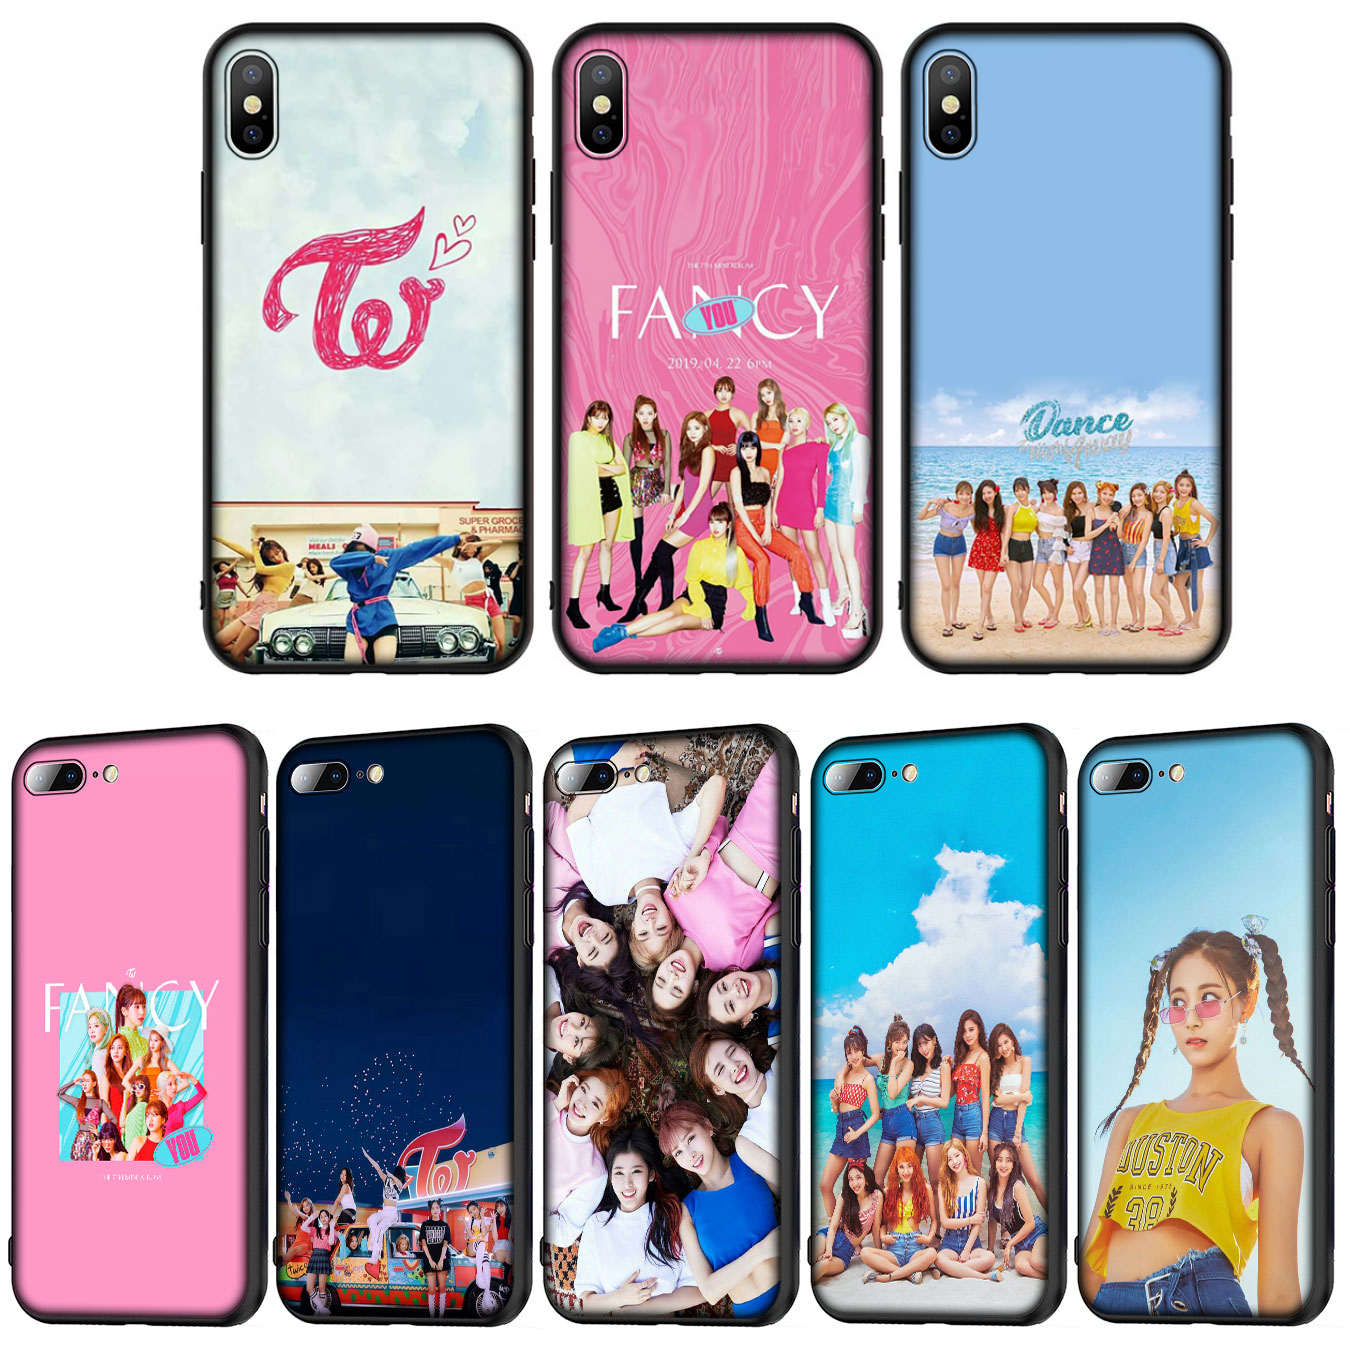 Twice Fancy You Iphone Case